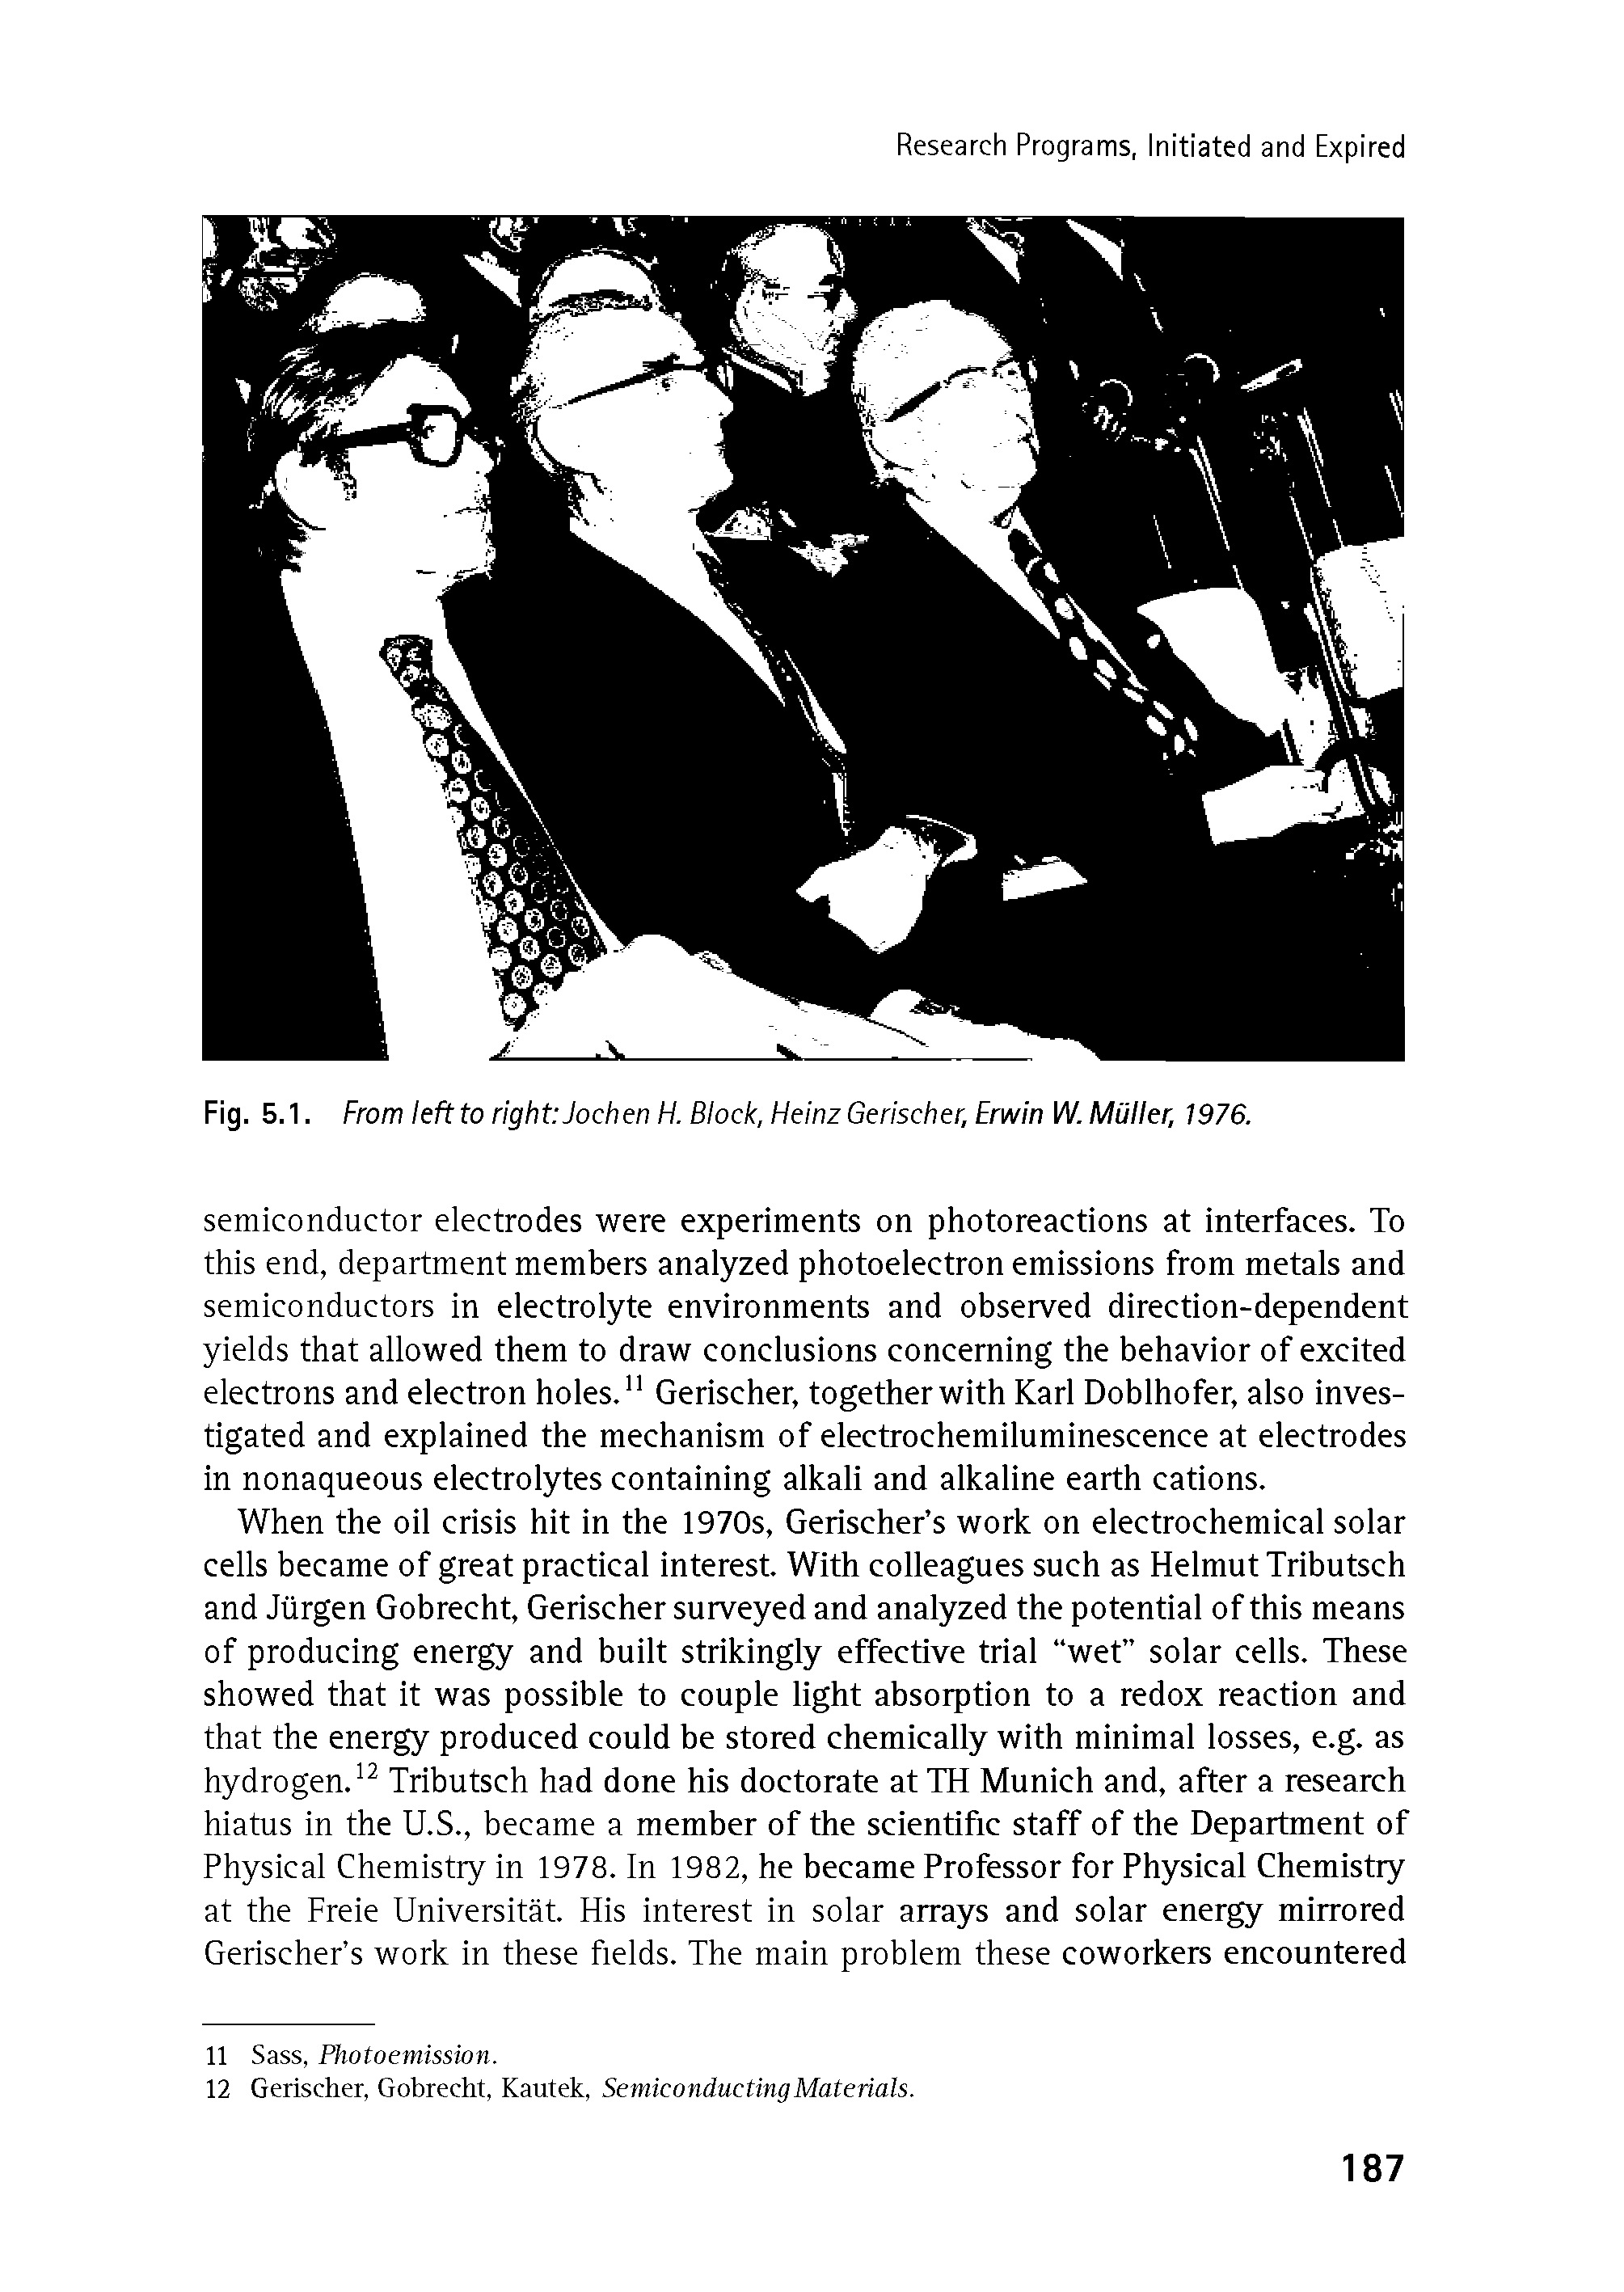 Fig. 5.1. From left to right Jochen H. Block, Heinz Gerischer, Erwin VJ. Muller, 1976.